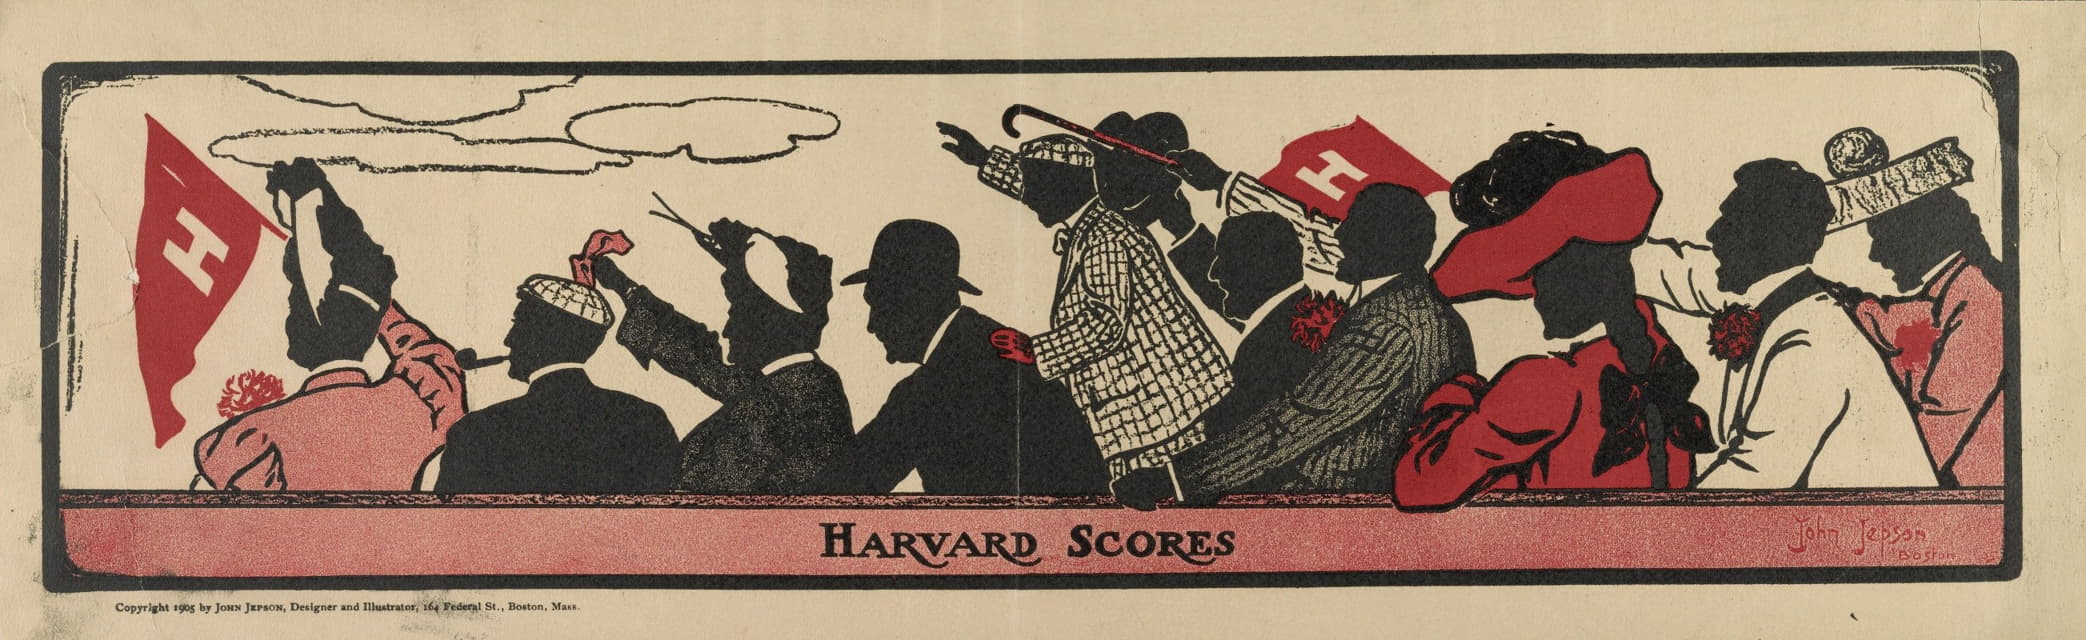 John Jepson - Harvard scores